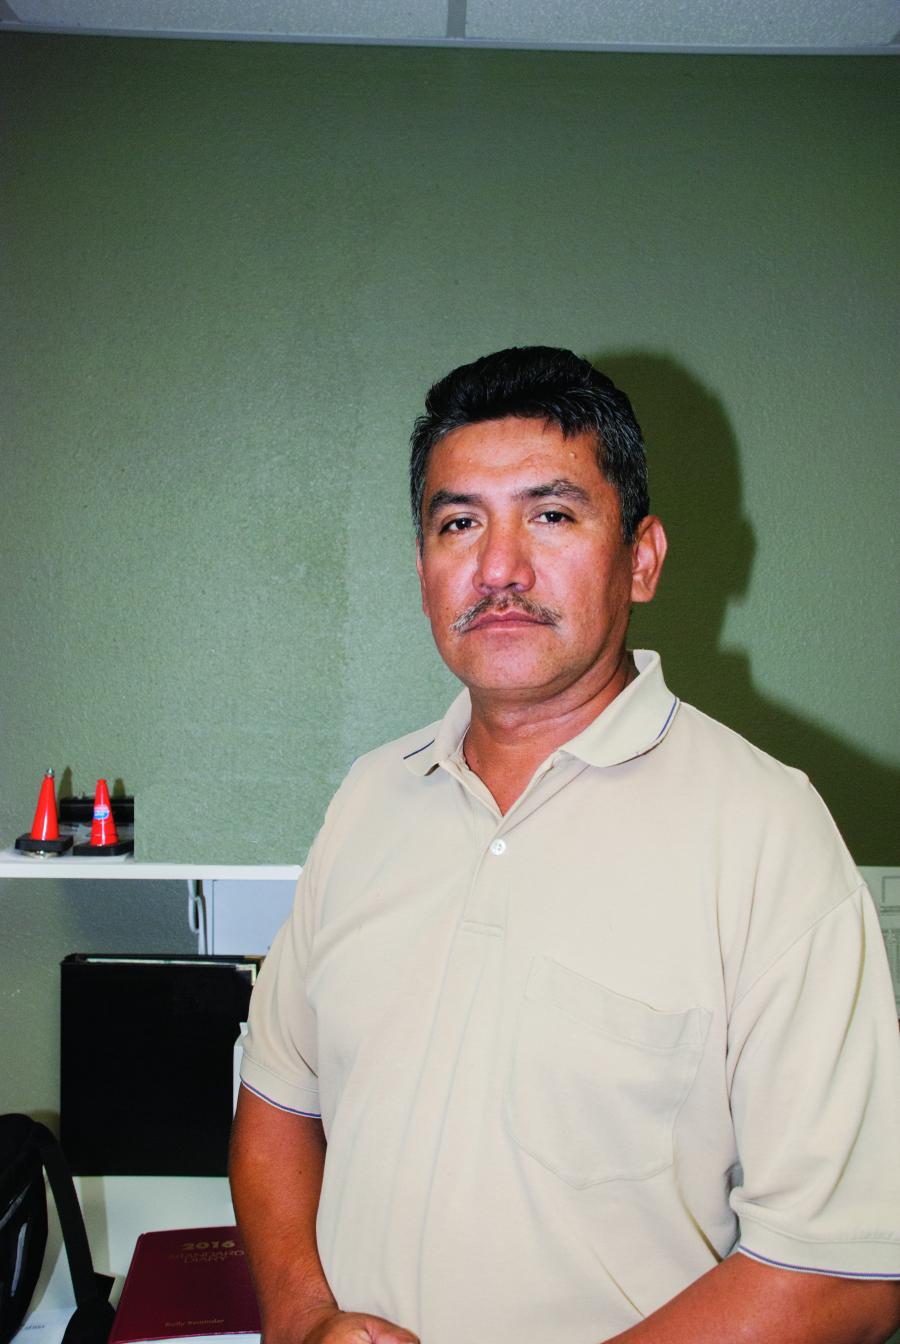 Marco Hernandez Sr., president of West Texas Rebar Placers